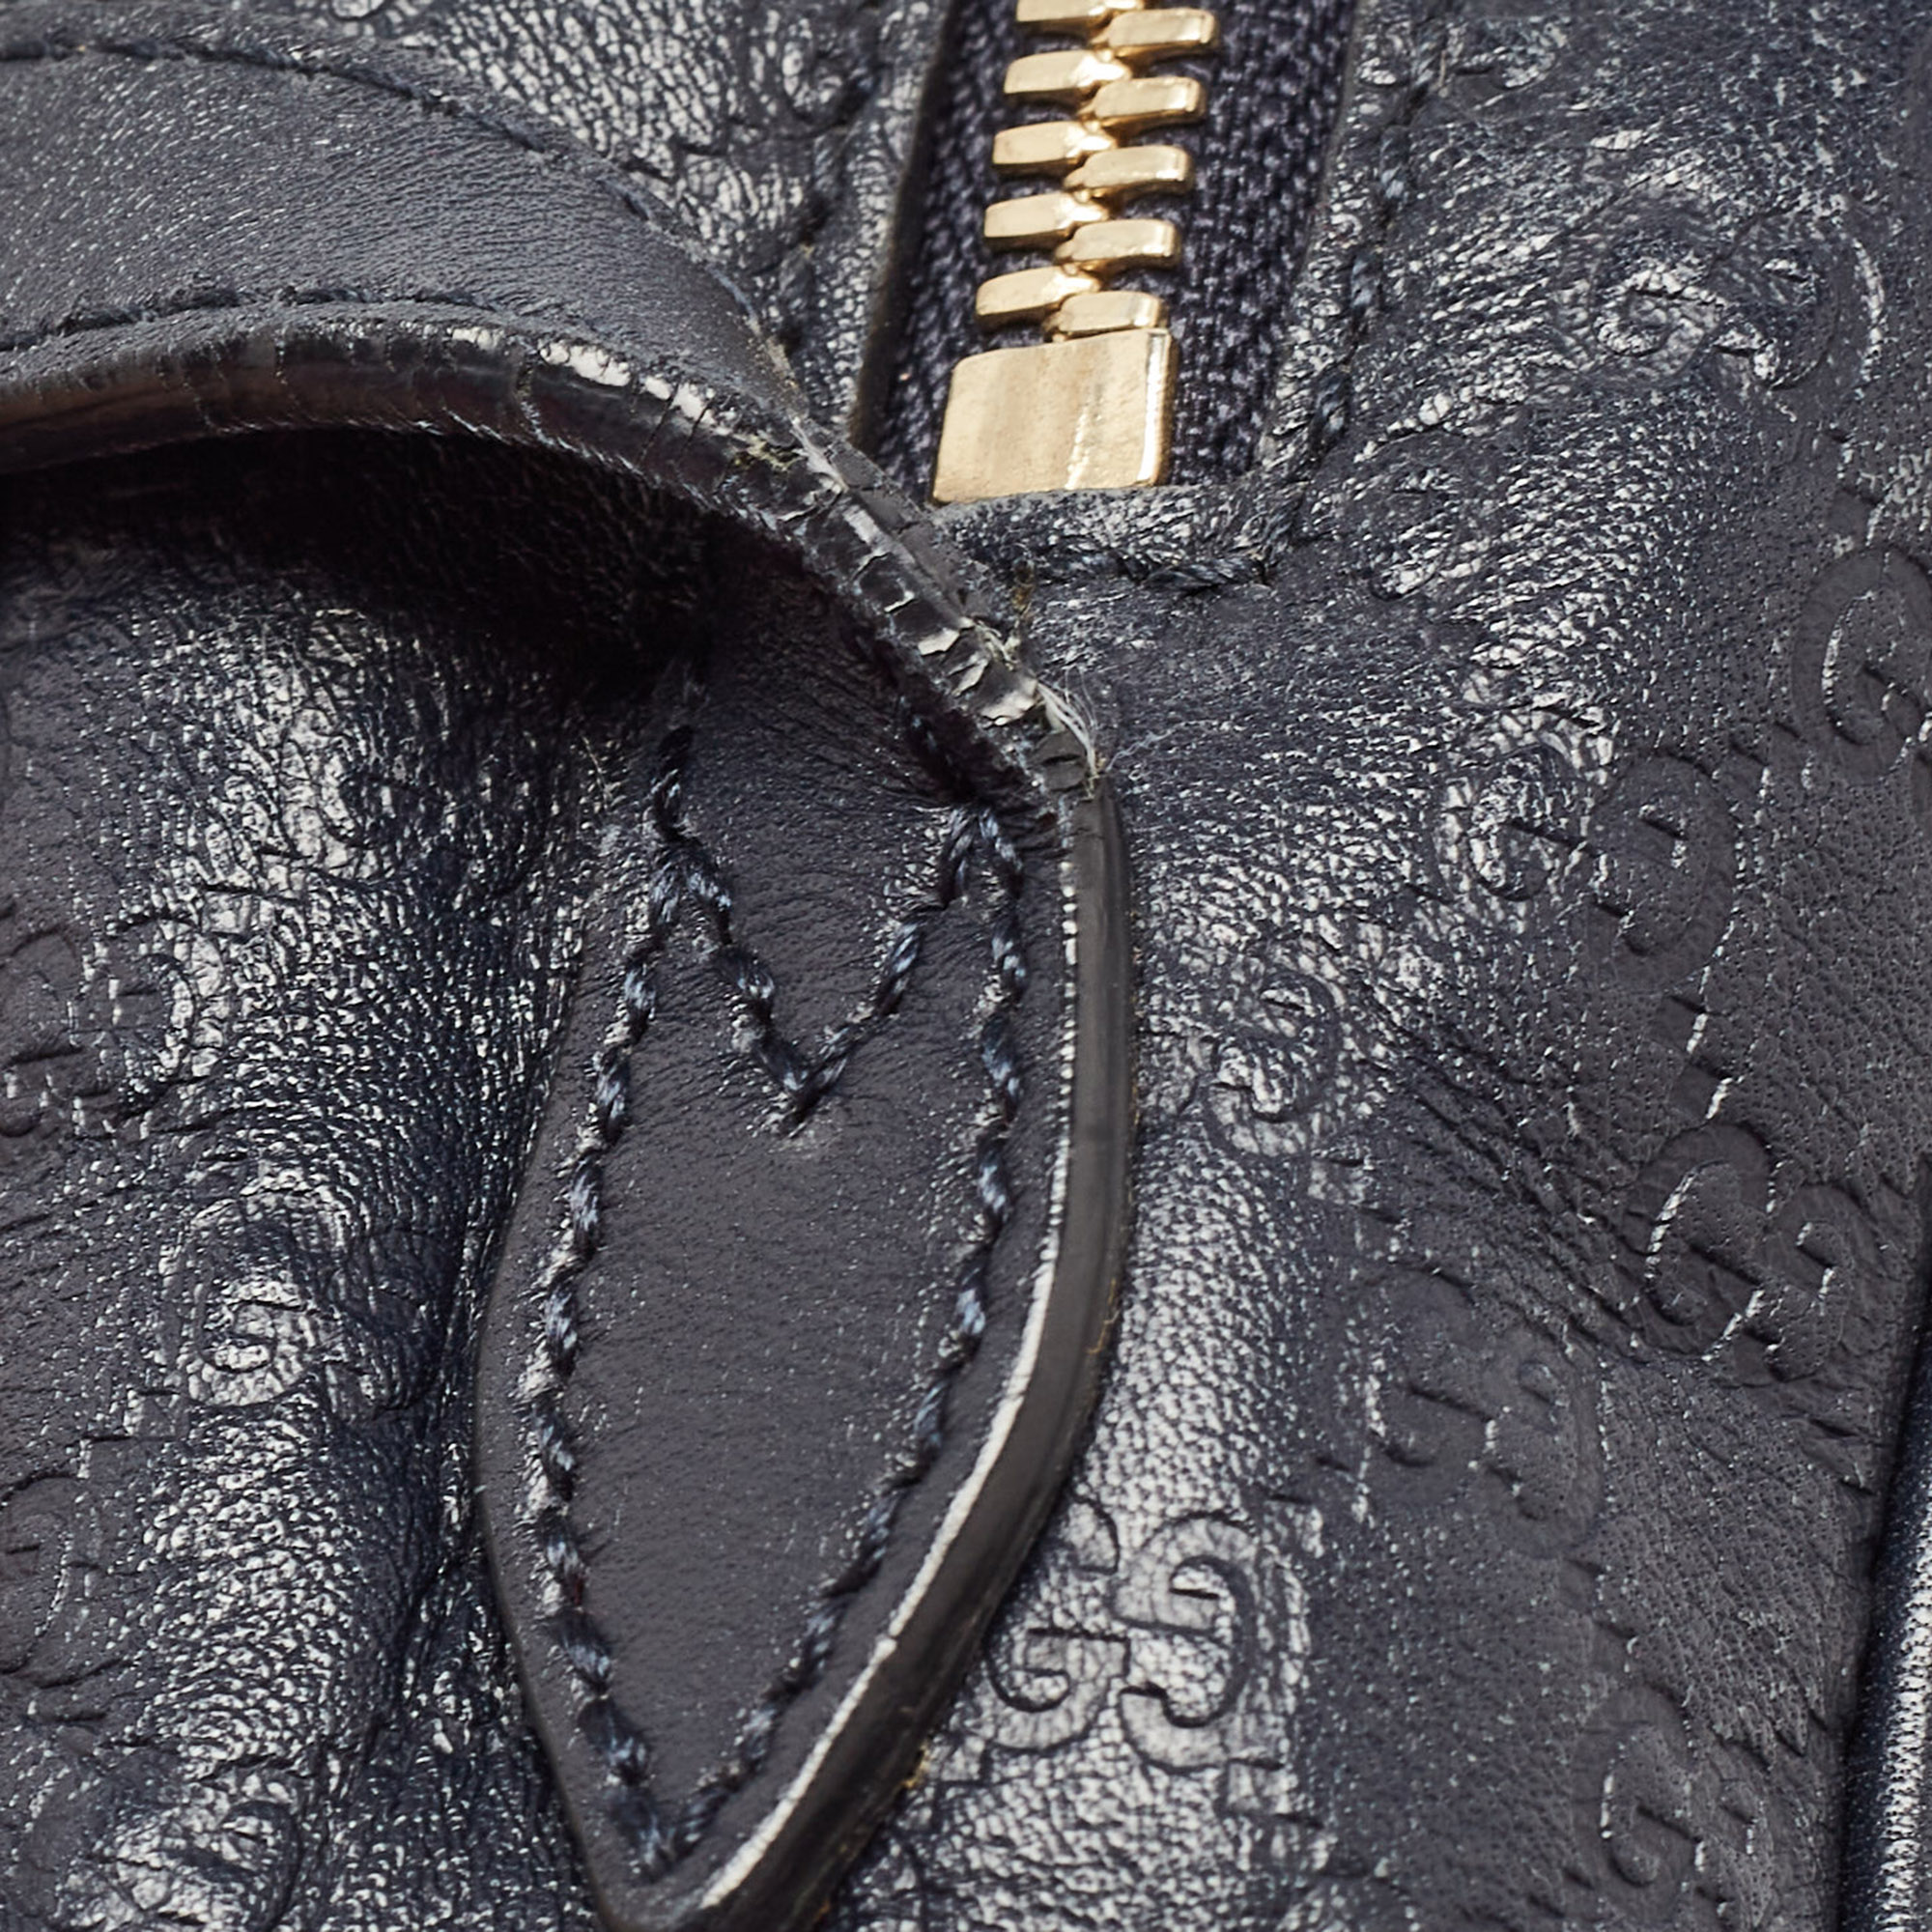 Gucci Navy Blue Microguccissima Leather Bree Crossbody Bag